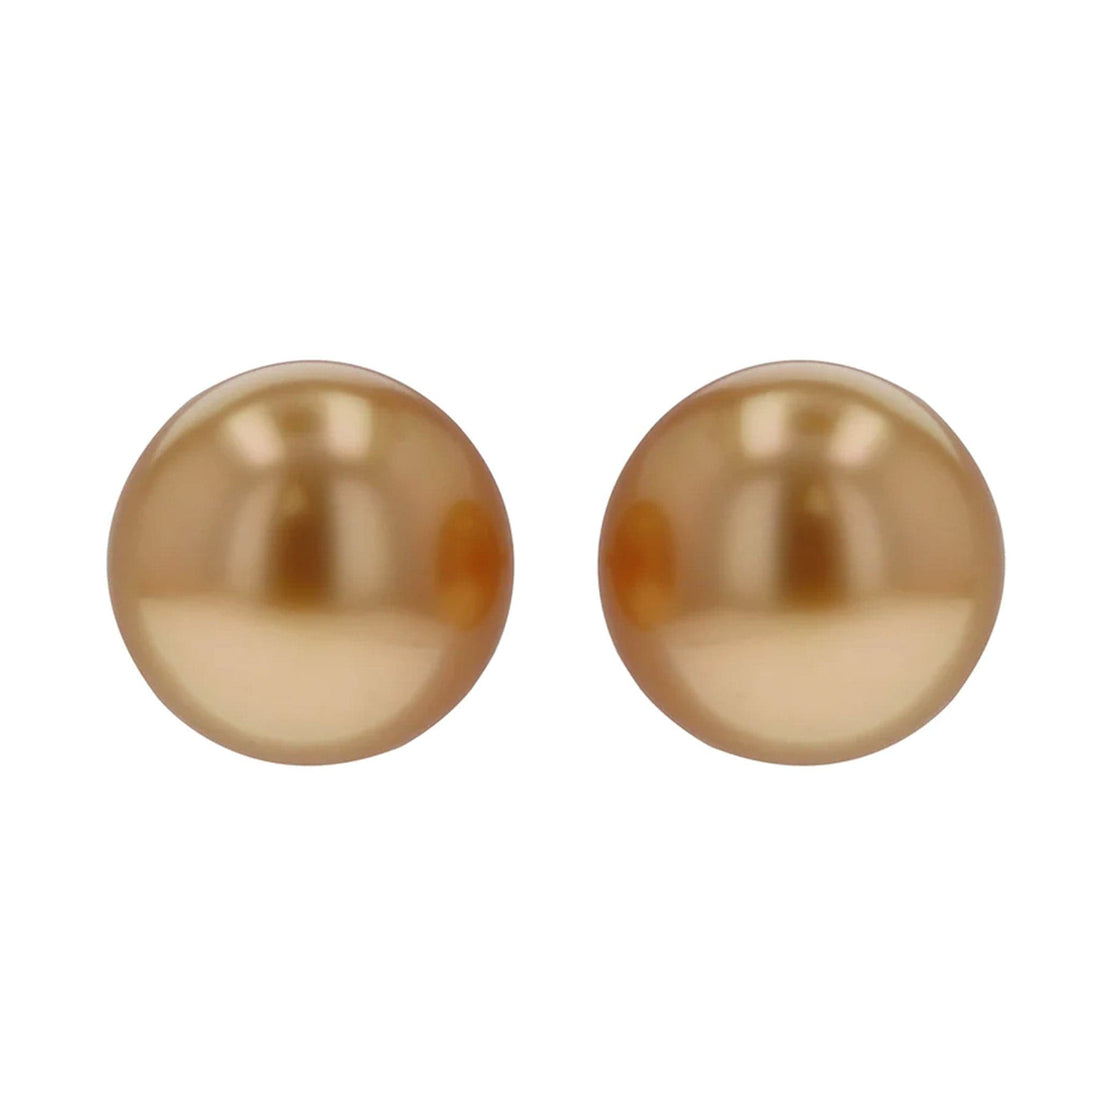 Mikimoto Golden South Sea Pearl Earrings Studs in 18k Gold